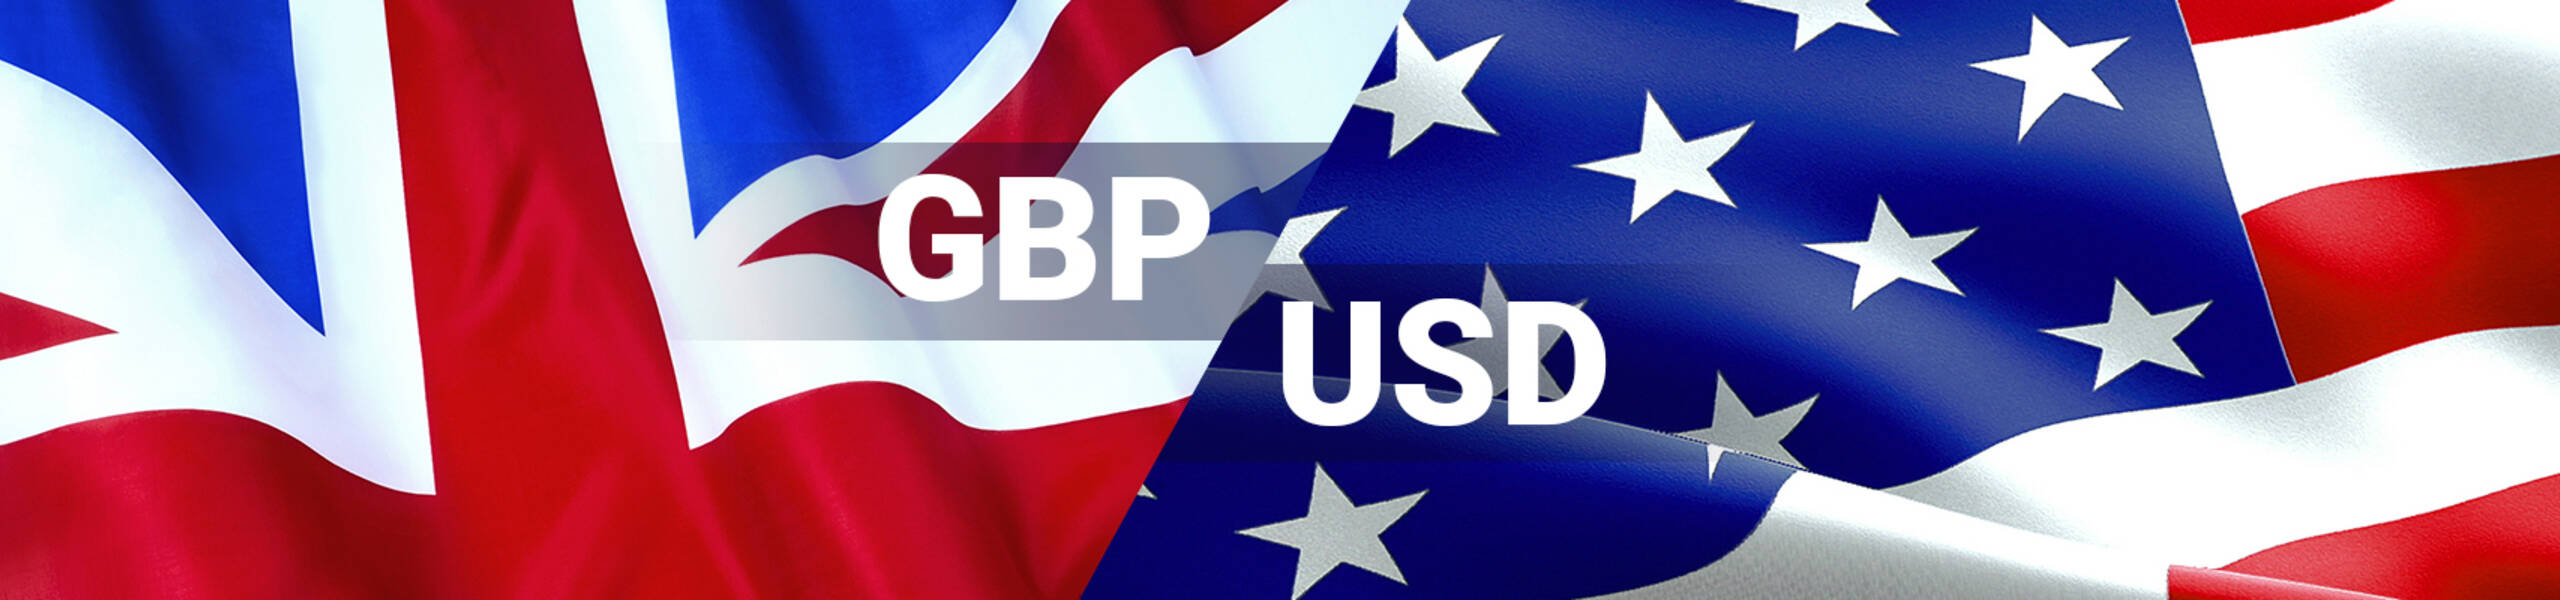 GBP/USD on its way to resume the bullish bias